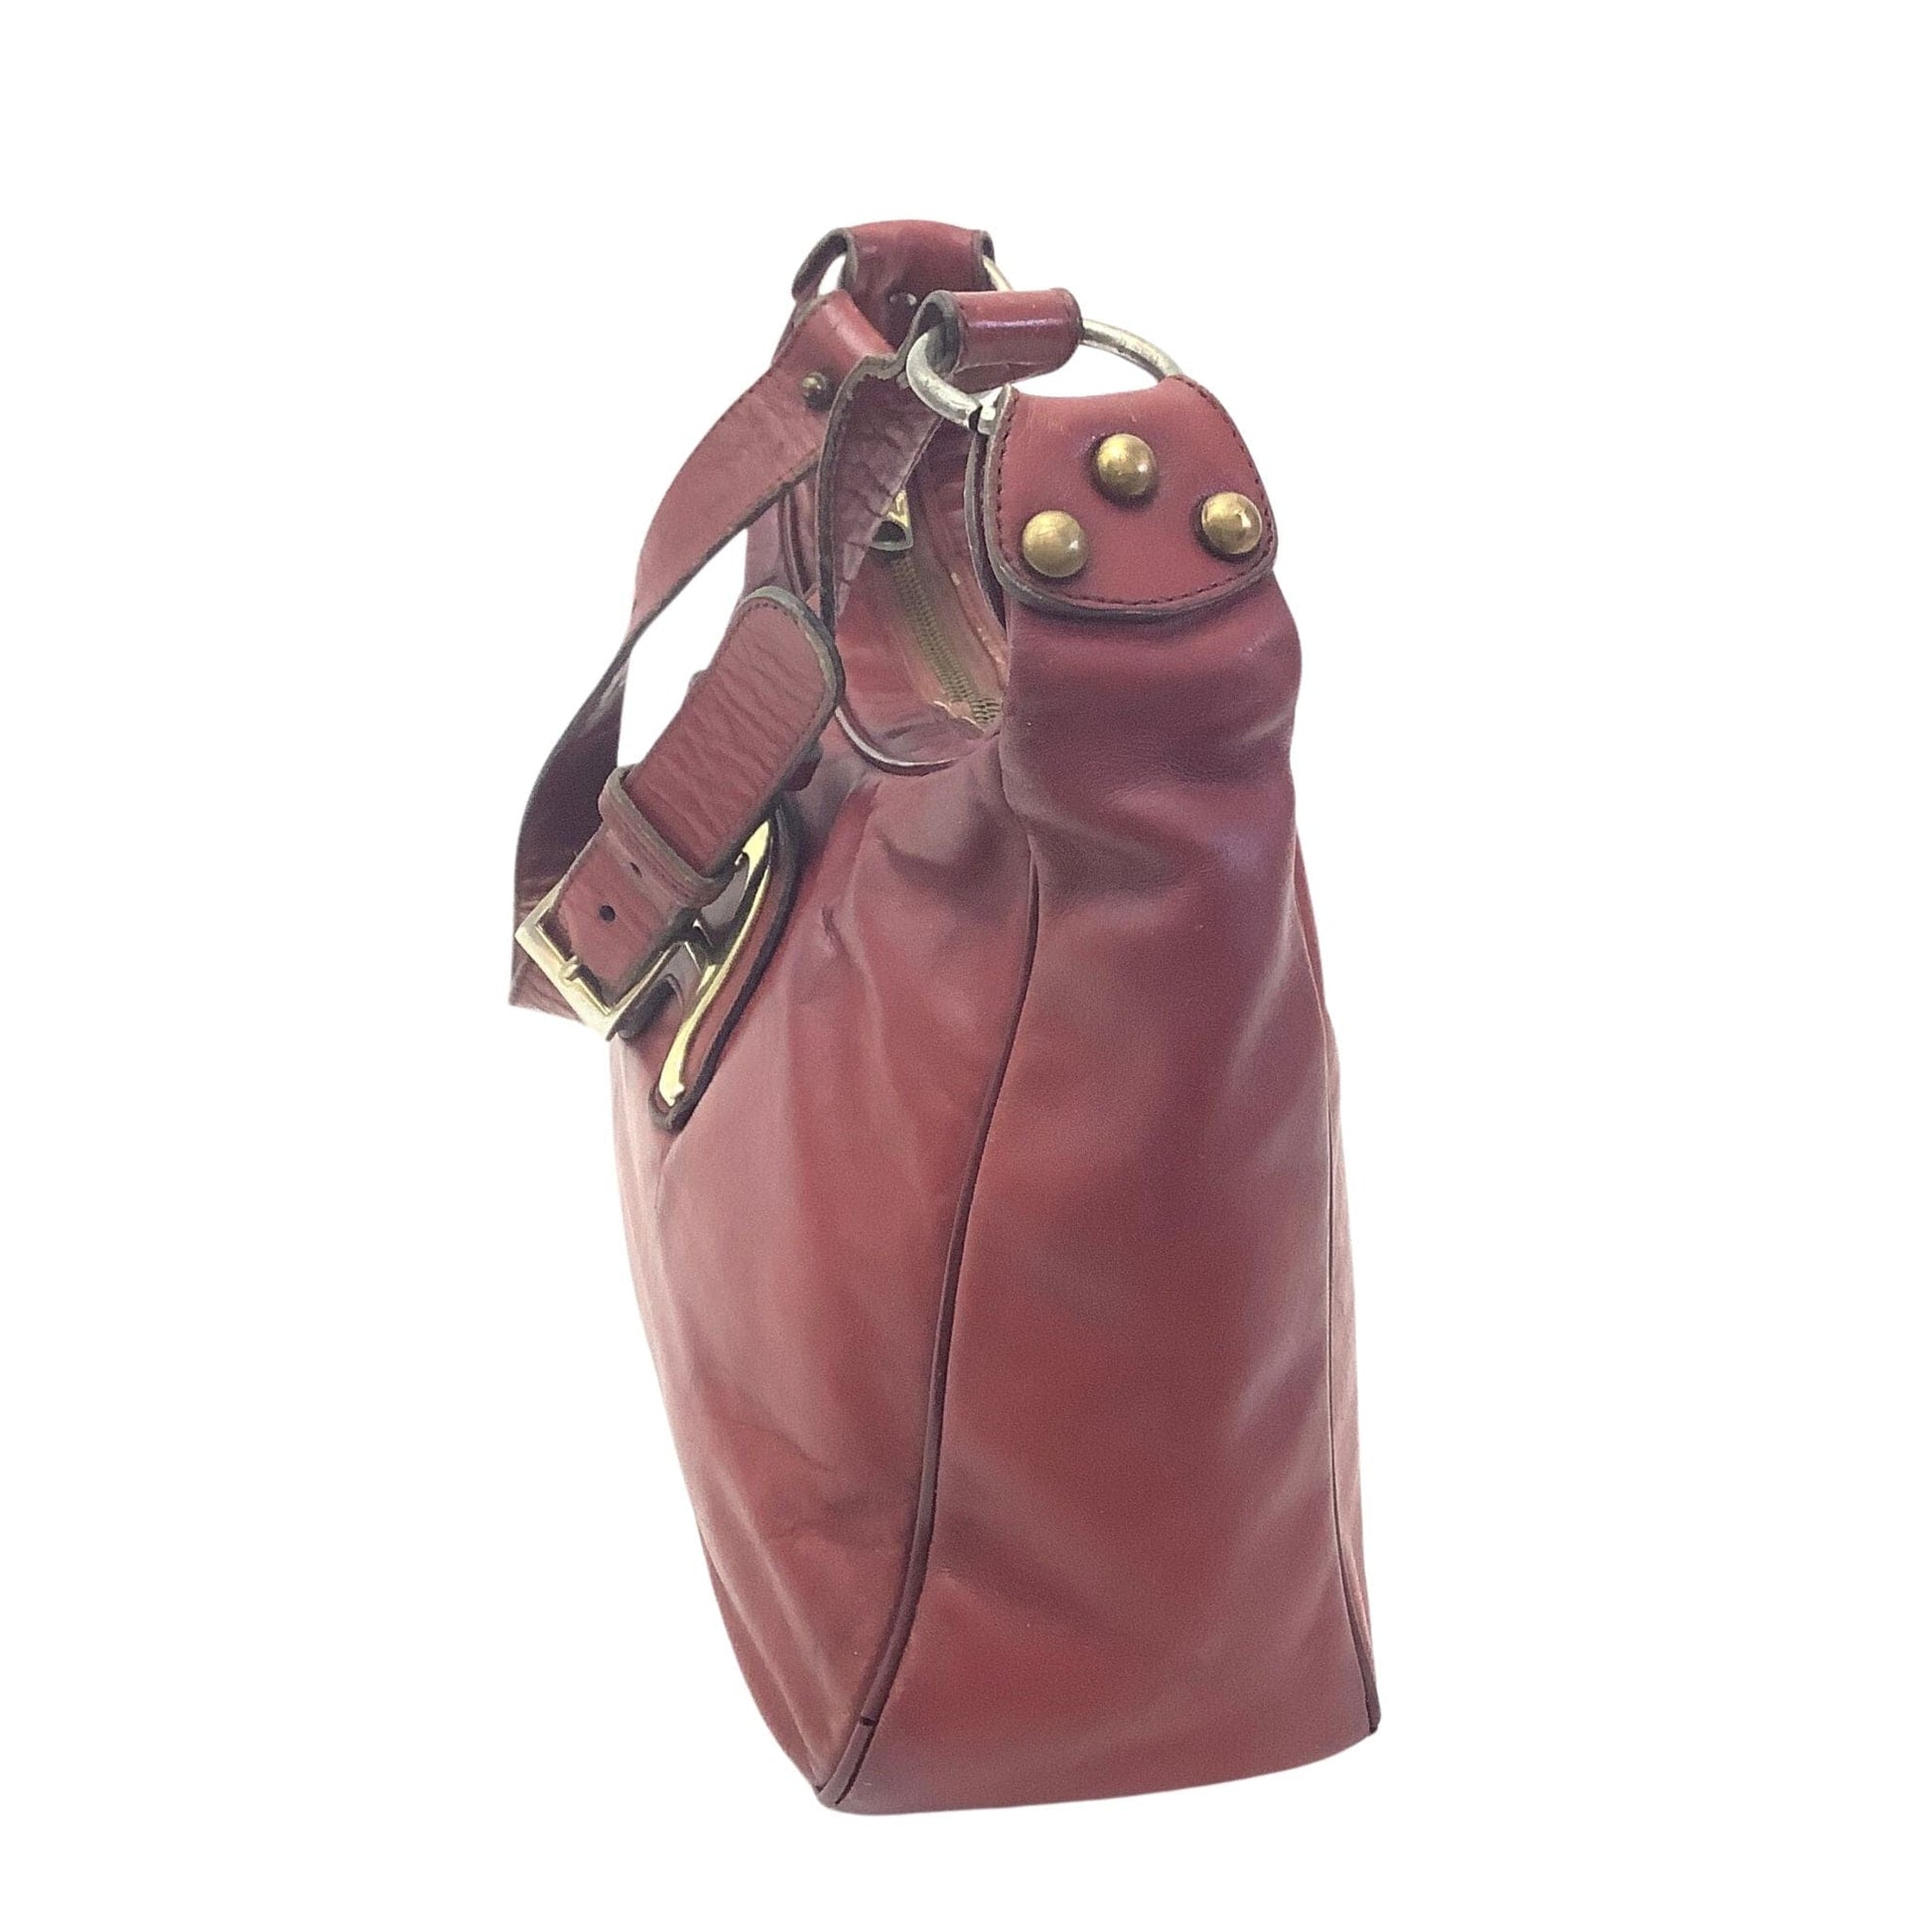 Distressed Aigner Bag Burgundy / Leather / Vintage 1970s